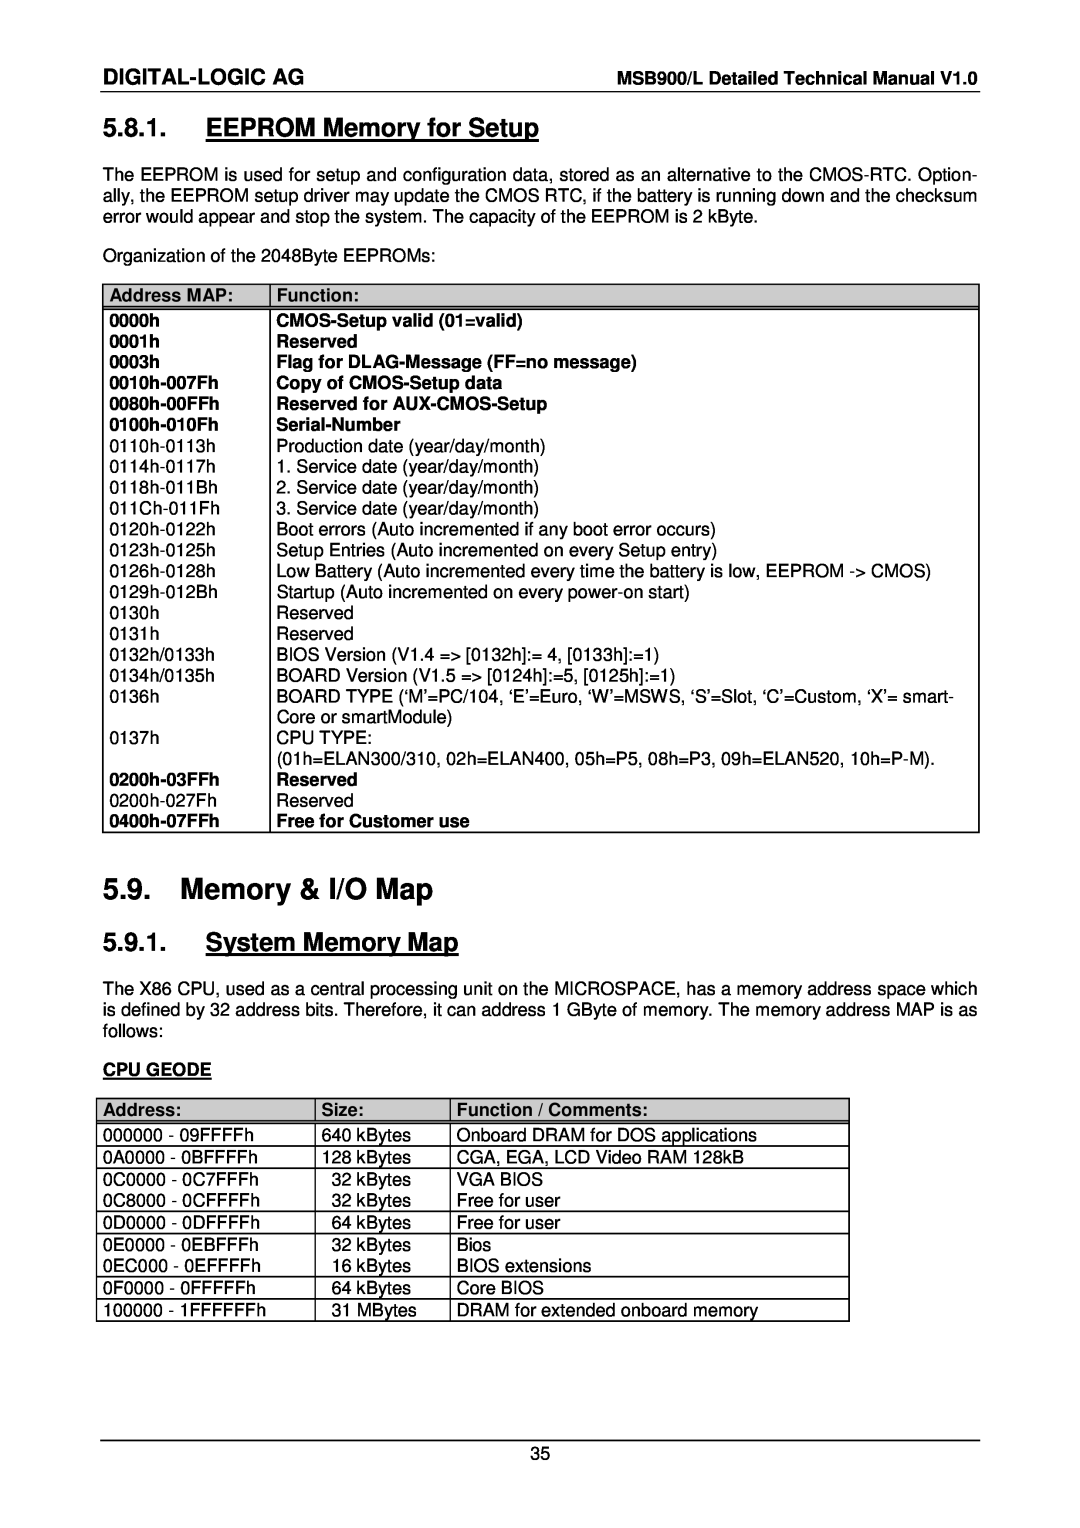 Compaq MSB900L user manual Memory & I/O Map, EEPROM Memory for Setup, System Memory Map, Digital-Logic Ag 